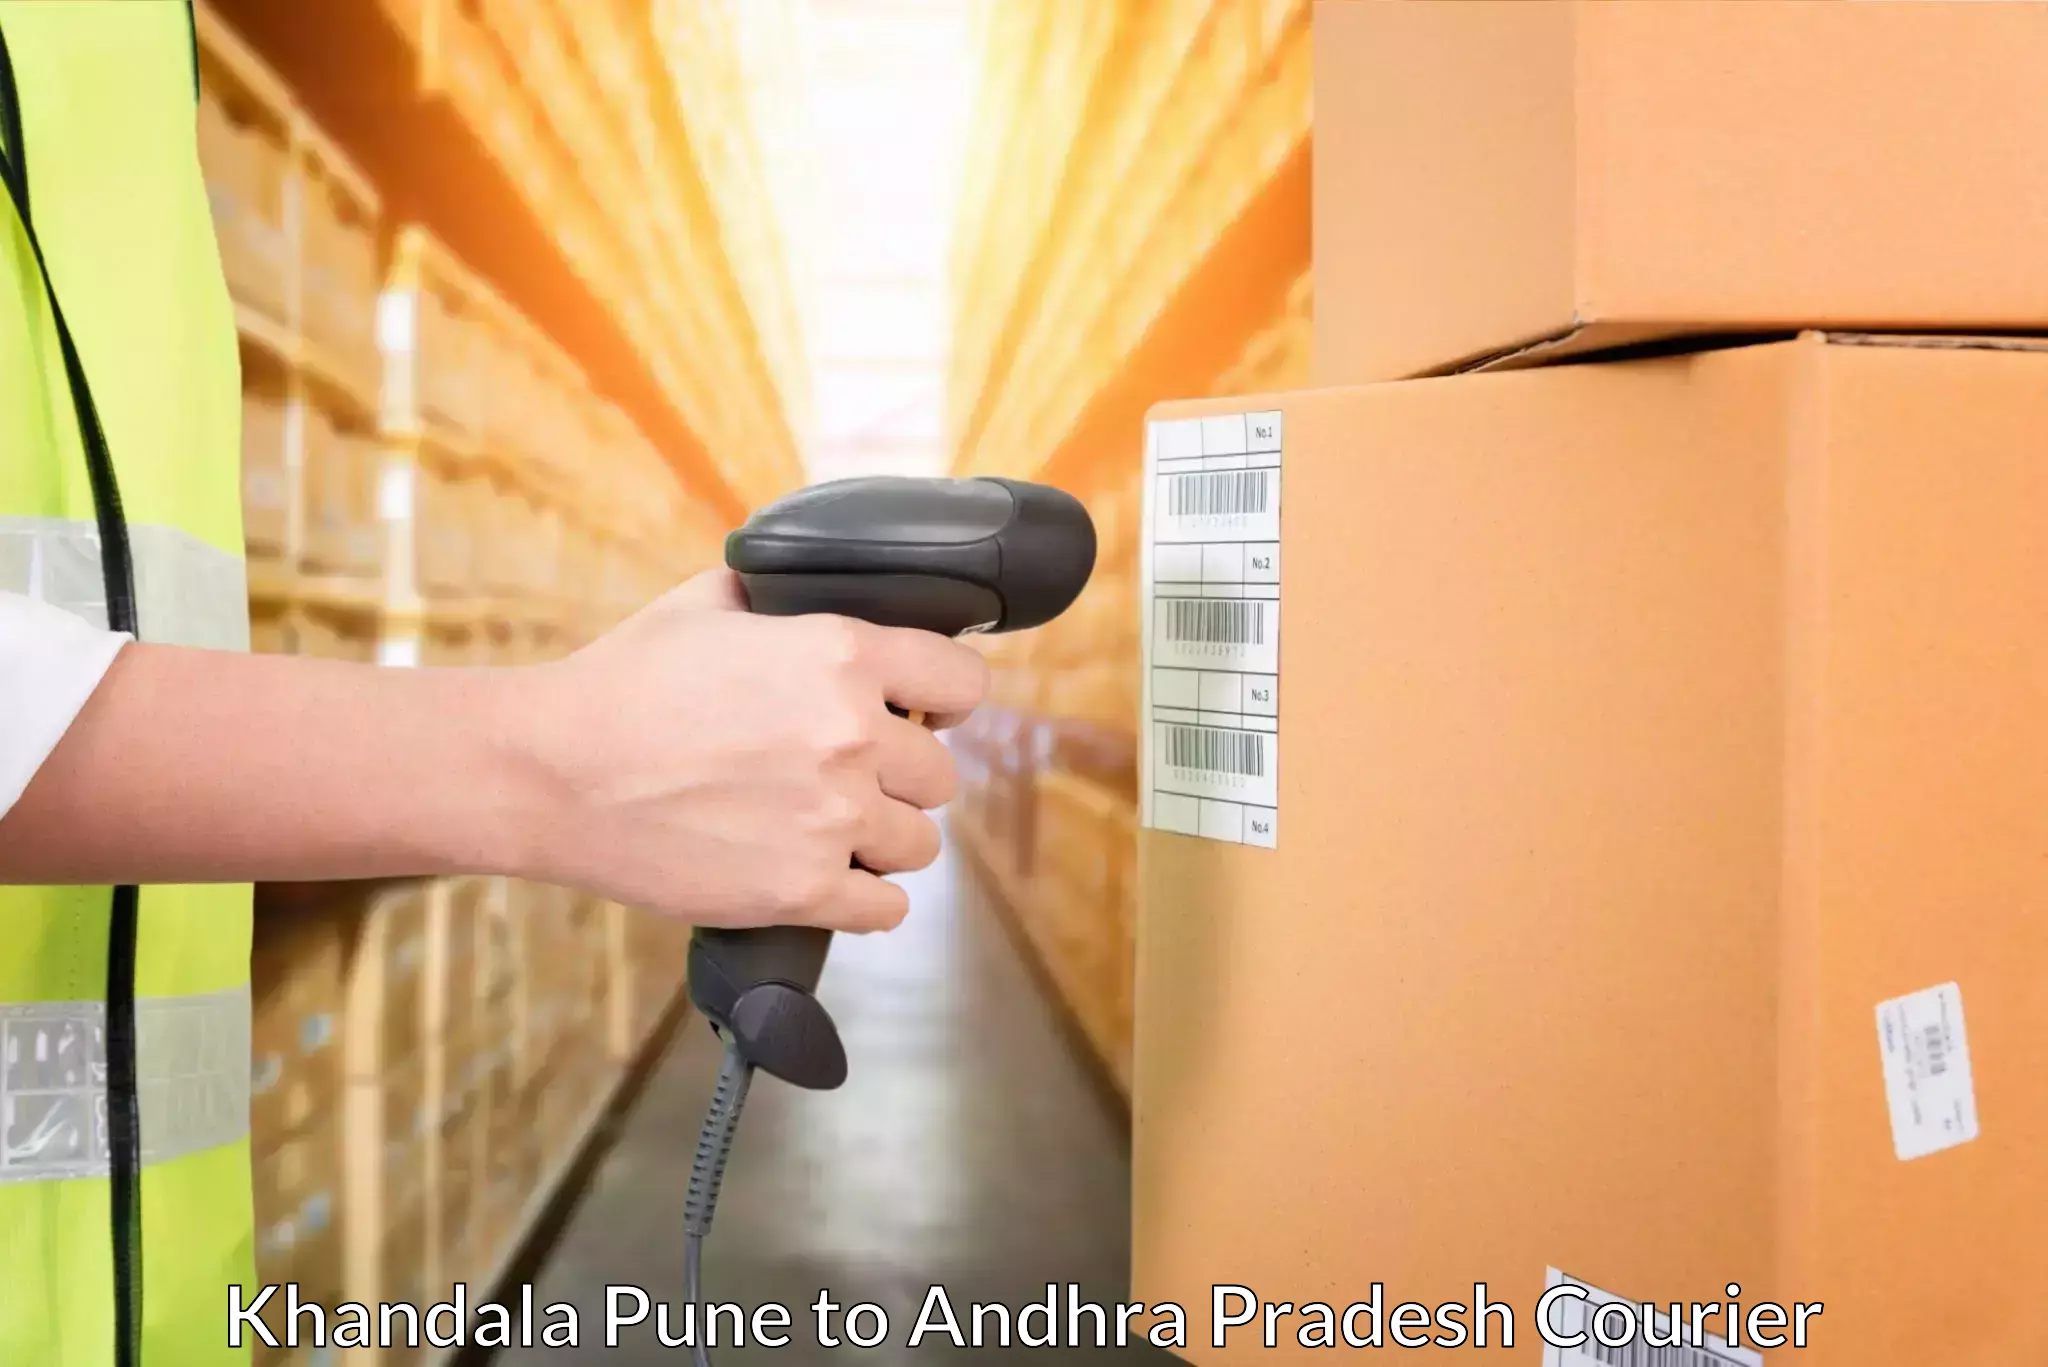 Nationwide parcel services Khandala Pune to Yellamanchili